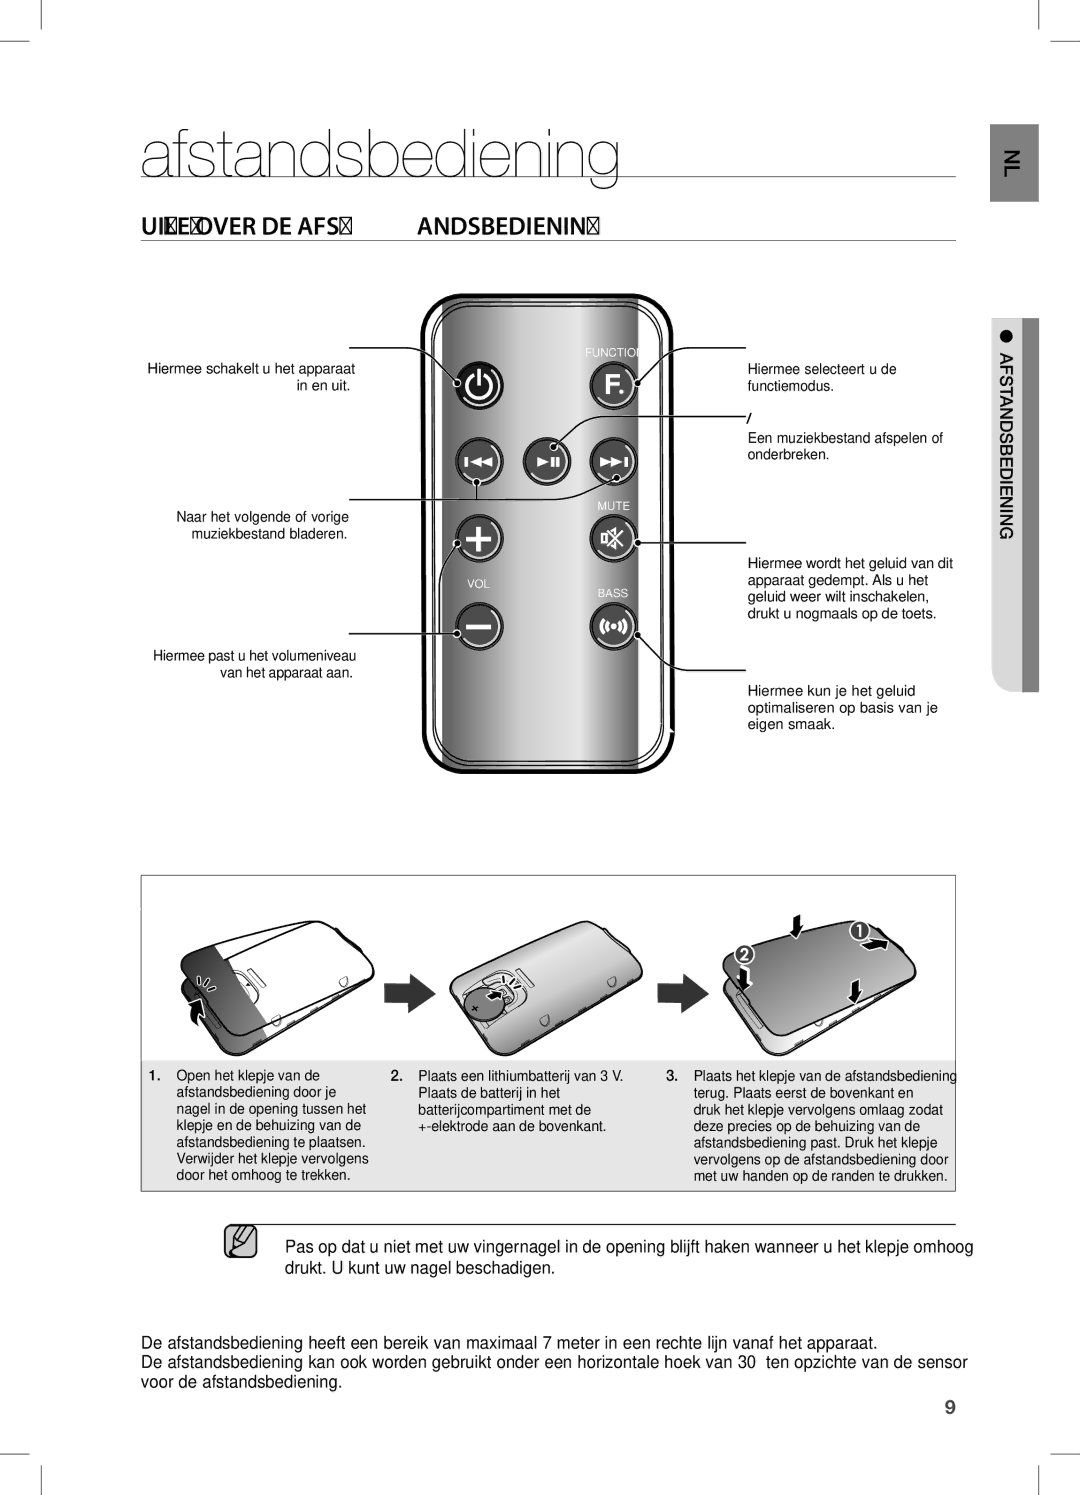 Samsung DA-E651/XN Uitleg Over DE Afstandsbediening, De batterij in de afstandsbediening plaatsen, INlIED SBE Standaf 